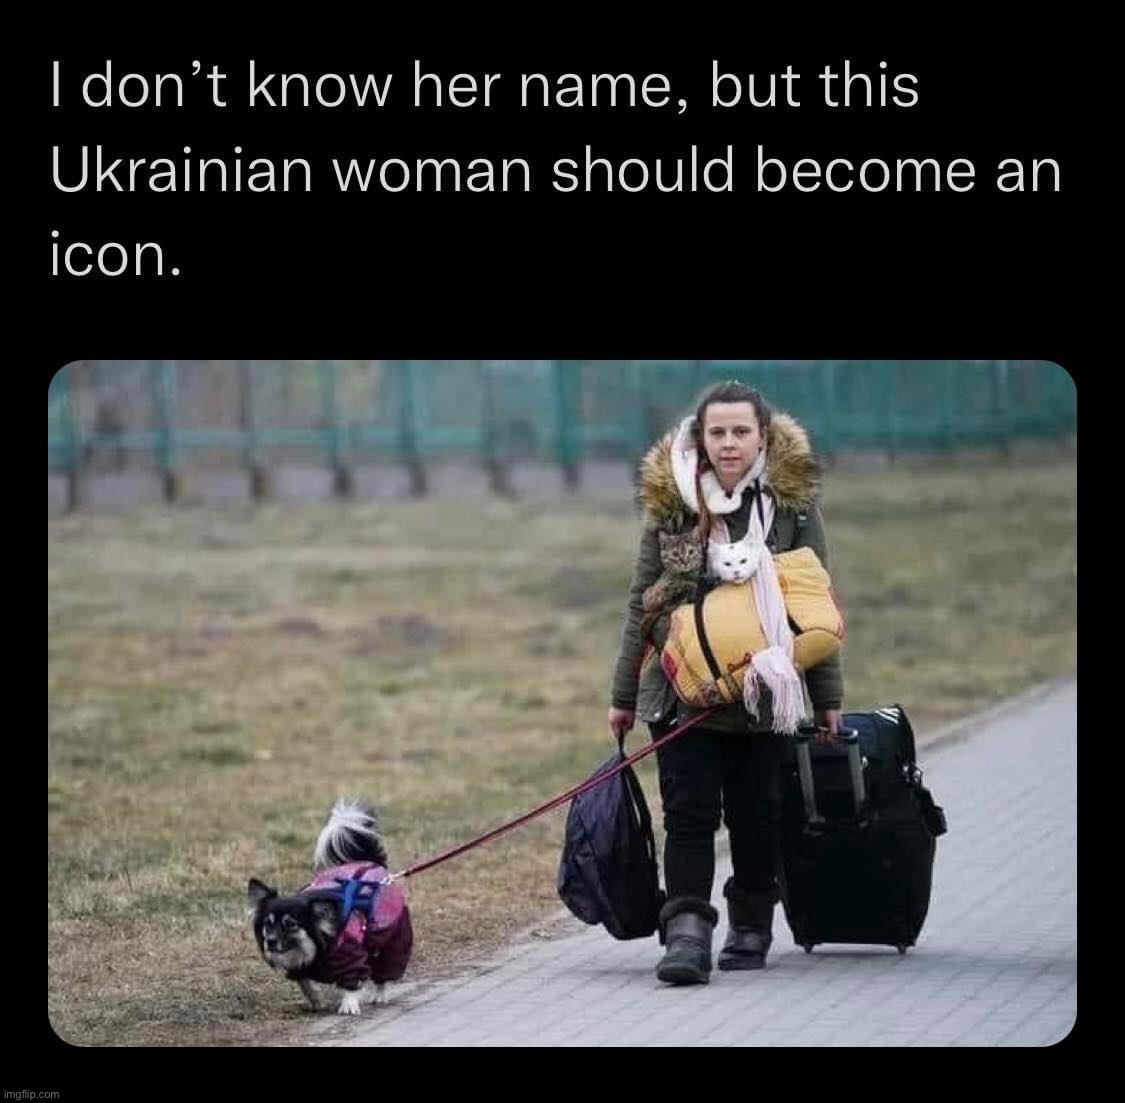 Ukrainian woman icon | image tagged in ukrainian woman icon | made w/ Imgflip meme maker